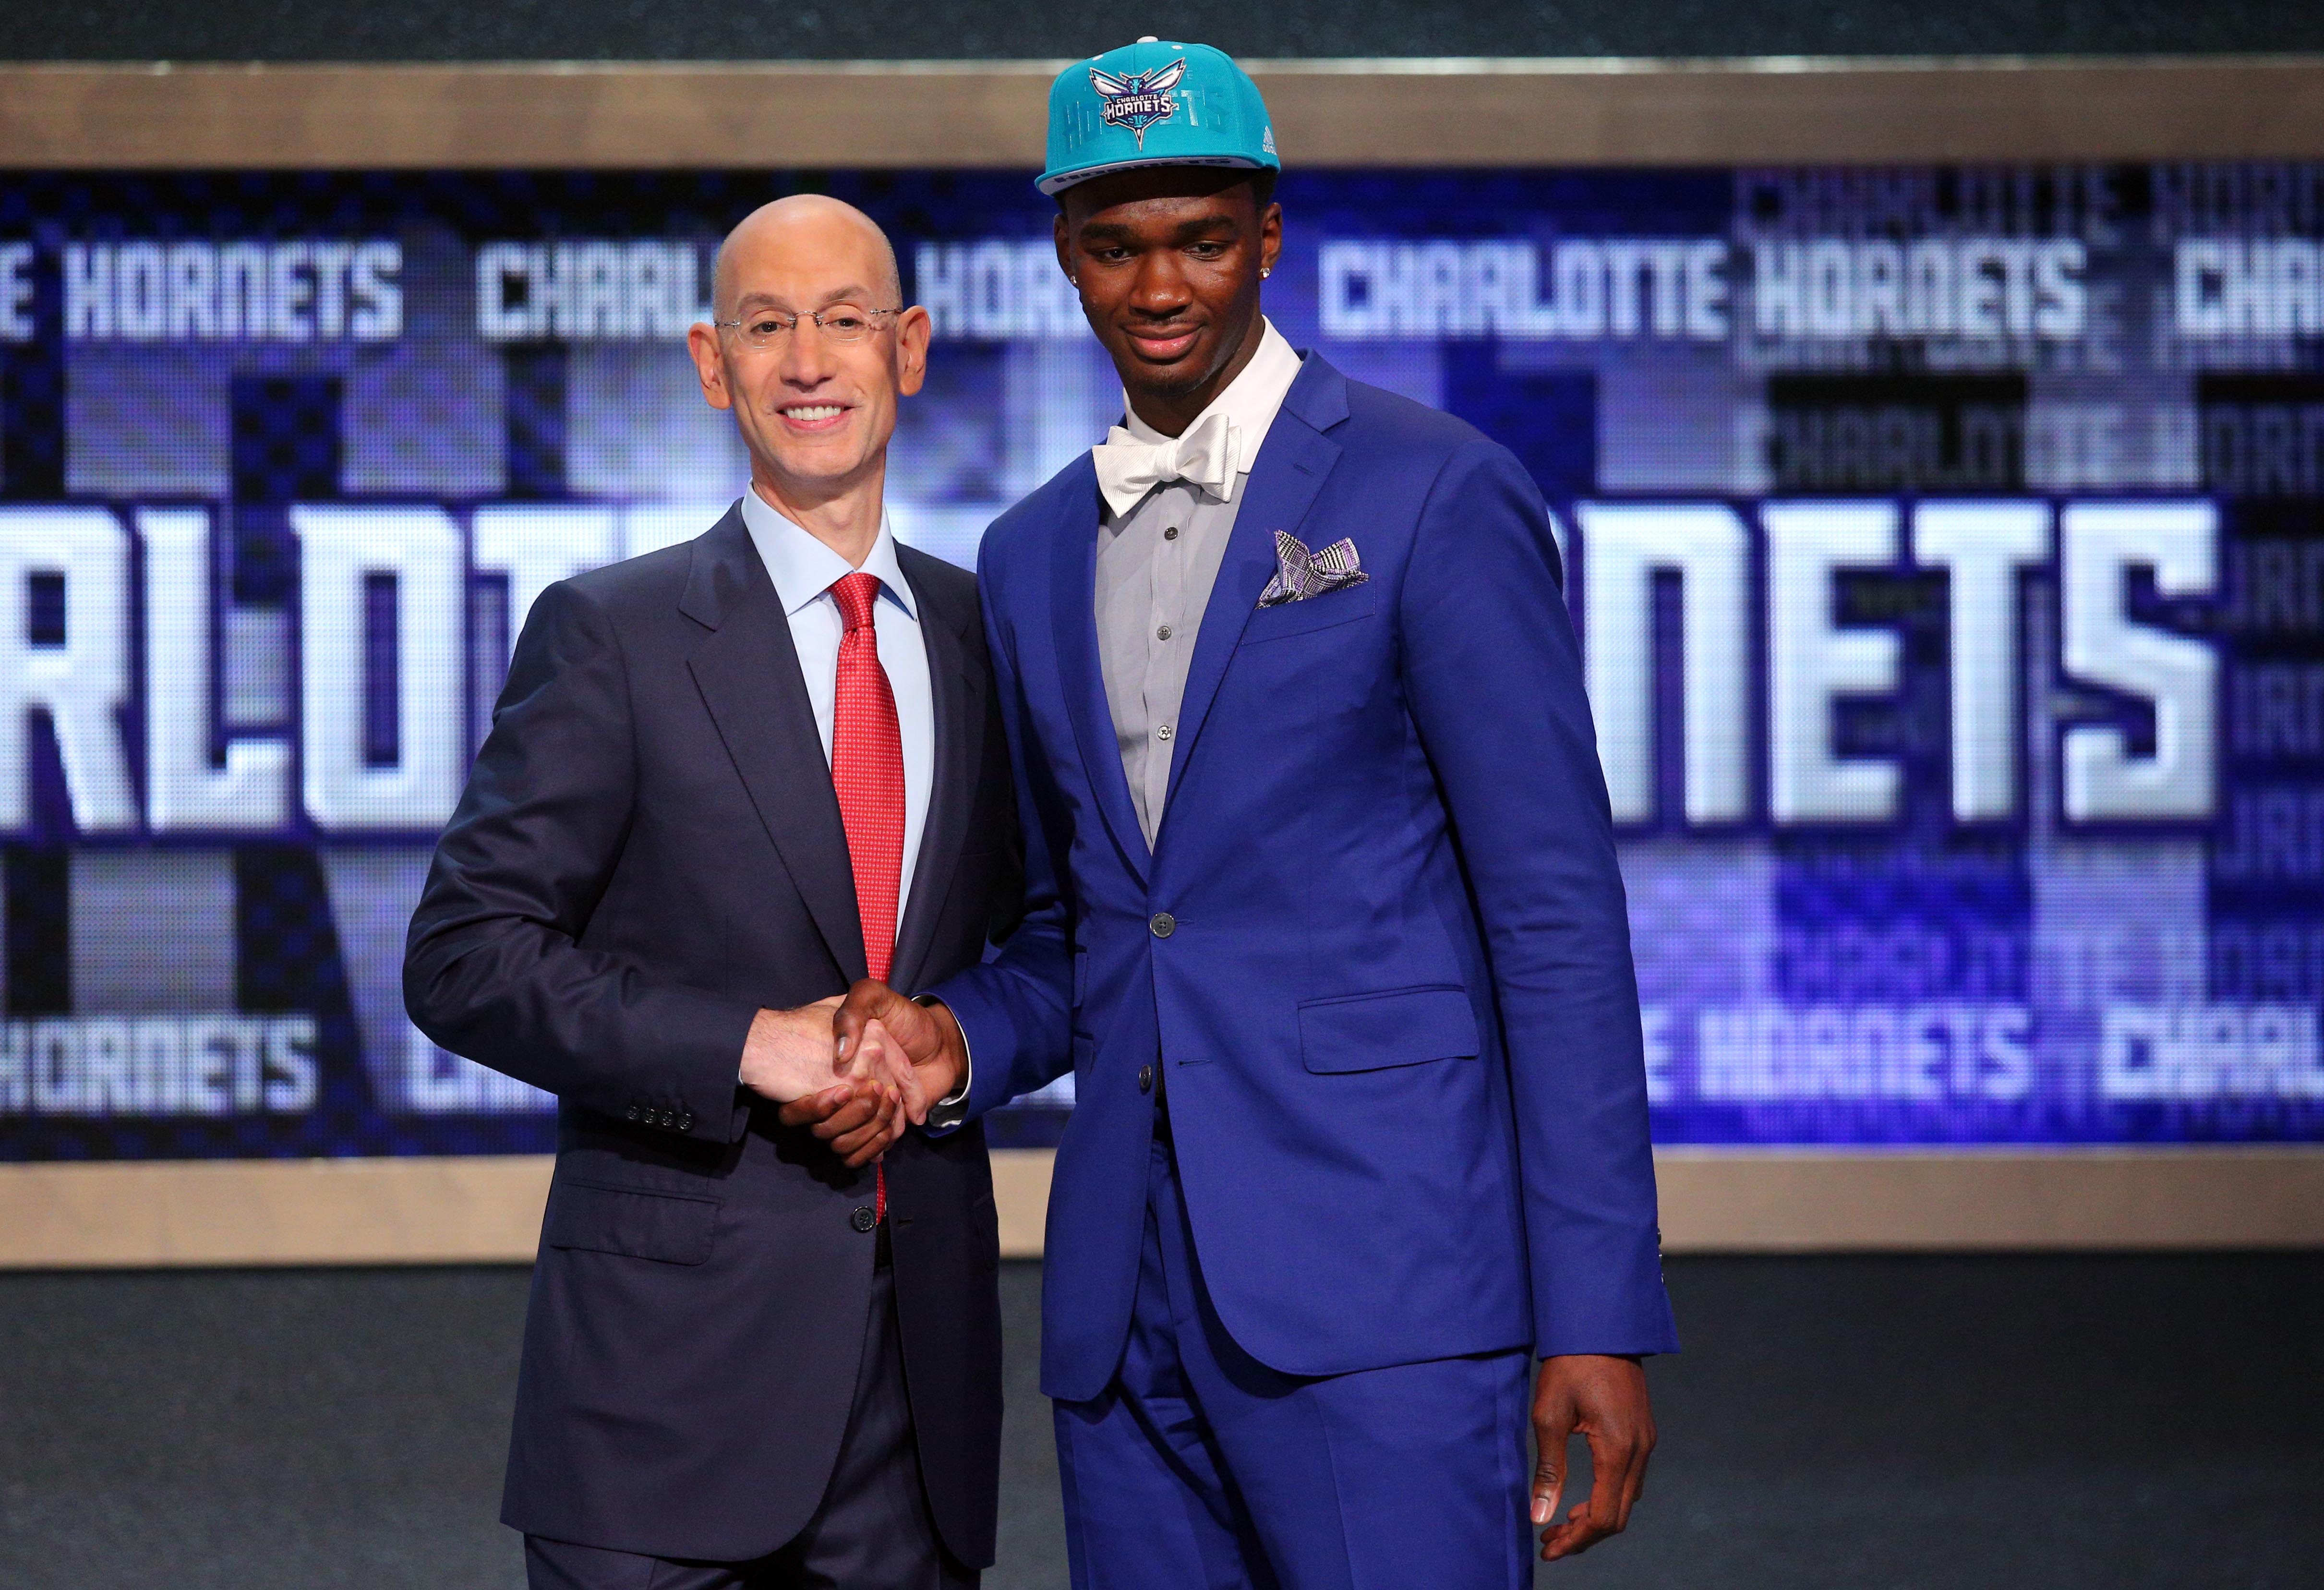 Seven Big Ten players taken in 2014 NBA Draft - Big Ten Network